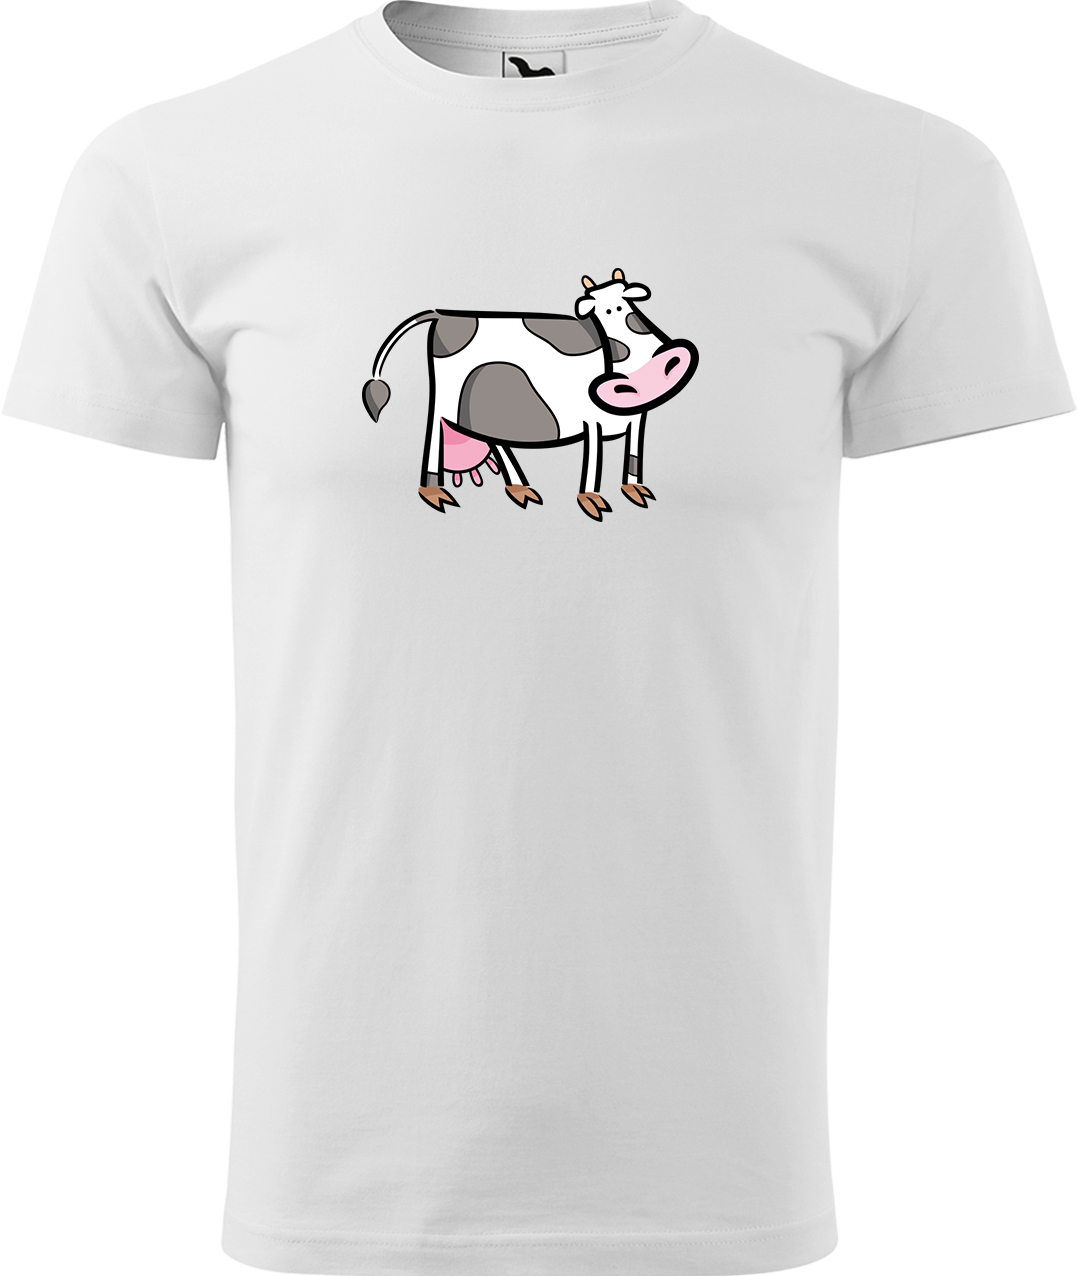 Pánské tričko s krávou - Kravička Velikost: 3XL, Barva: Bílá (00), Střih: pánský